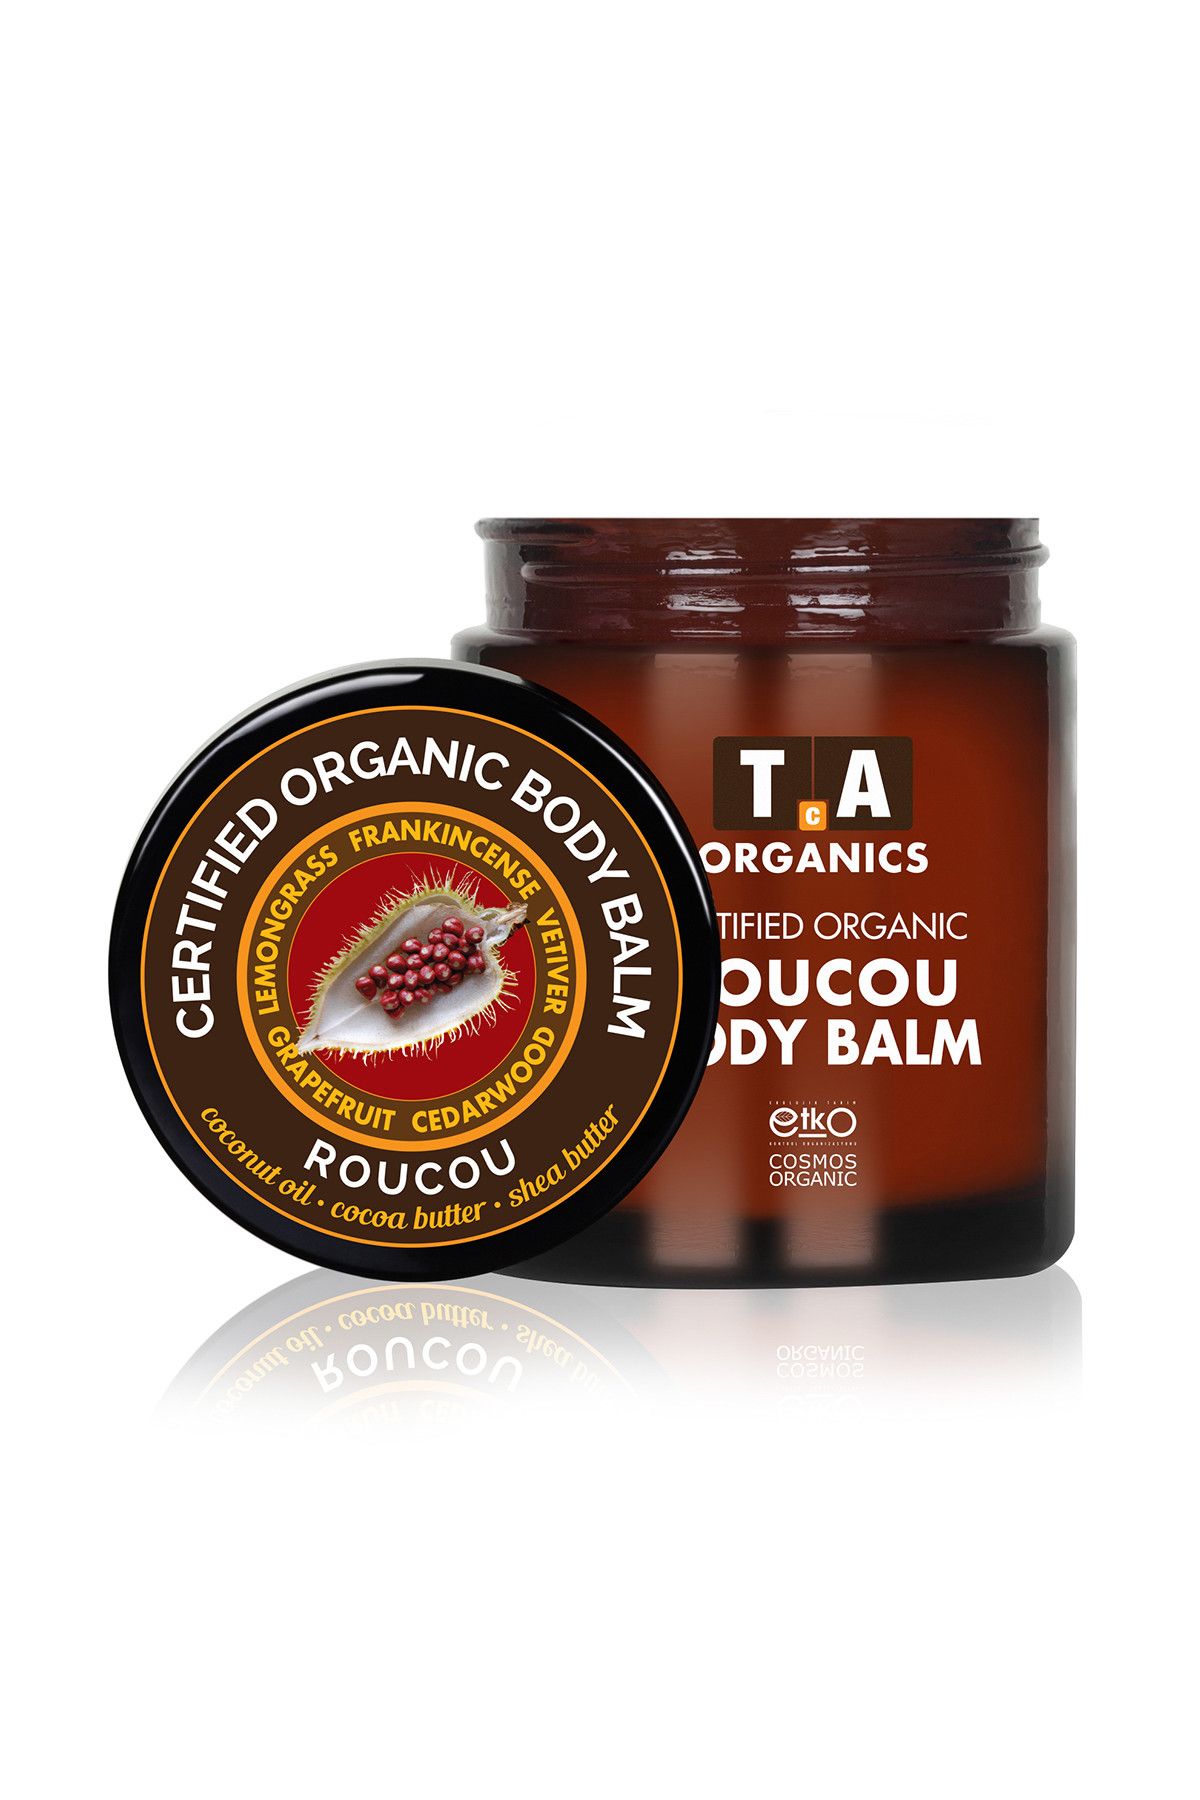 Tca Organics Vücut Balmı - Roucou Body Balm 100 ml 8680196183026